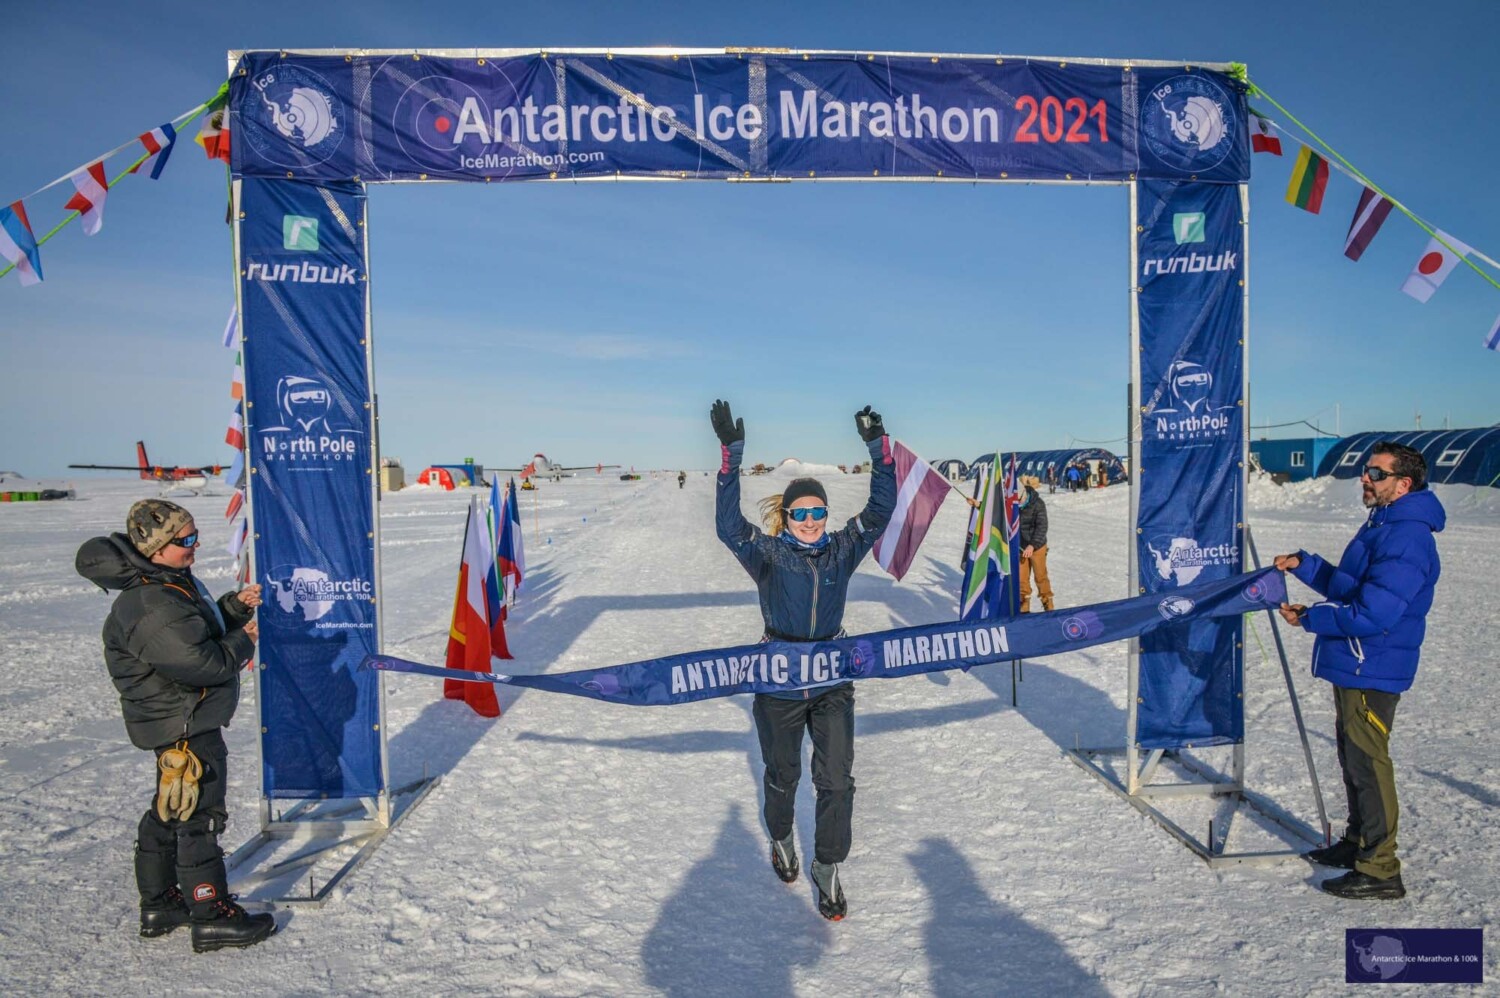 The Antarctic Ice Marathon 